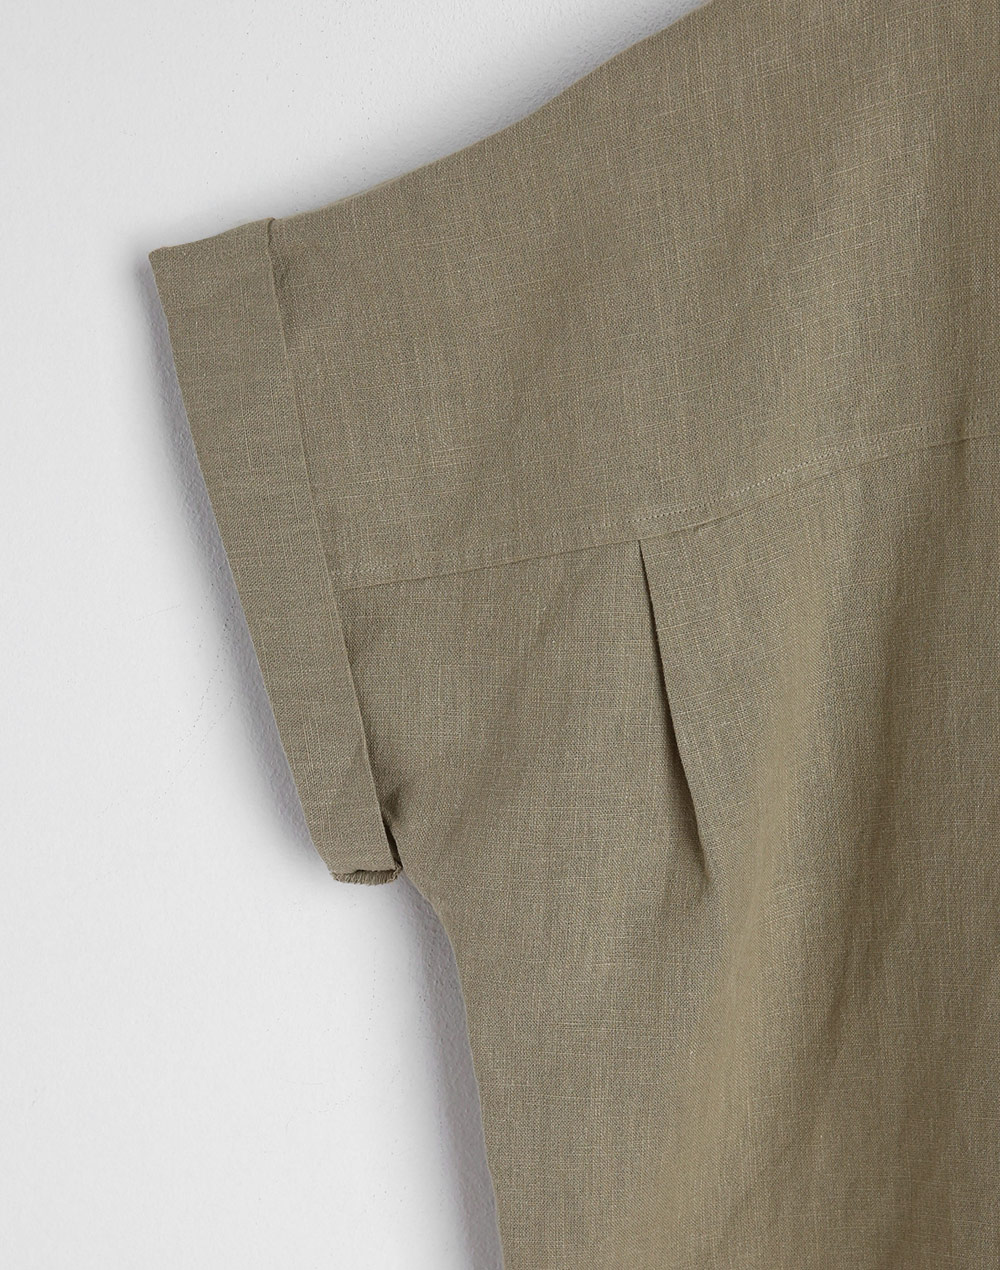 Shirt  & Skirt Set・t279608（セット/スカート）| shiho_takechi | 東京ガールズマーケット